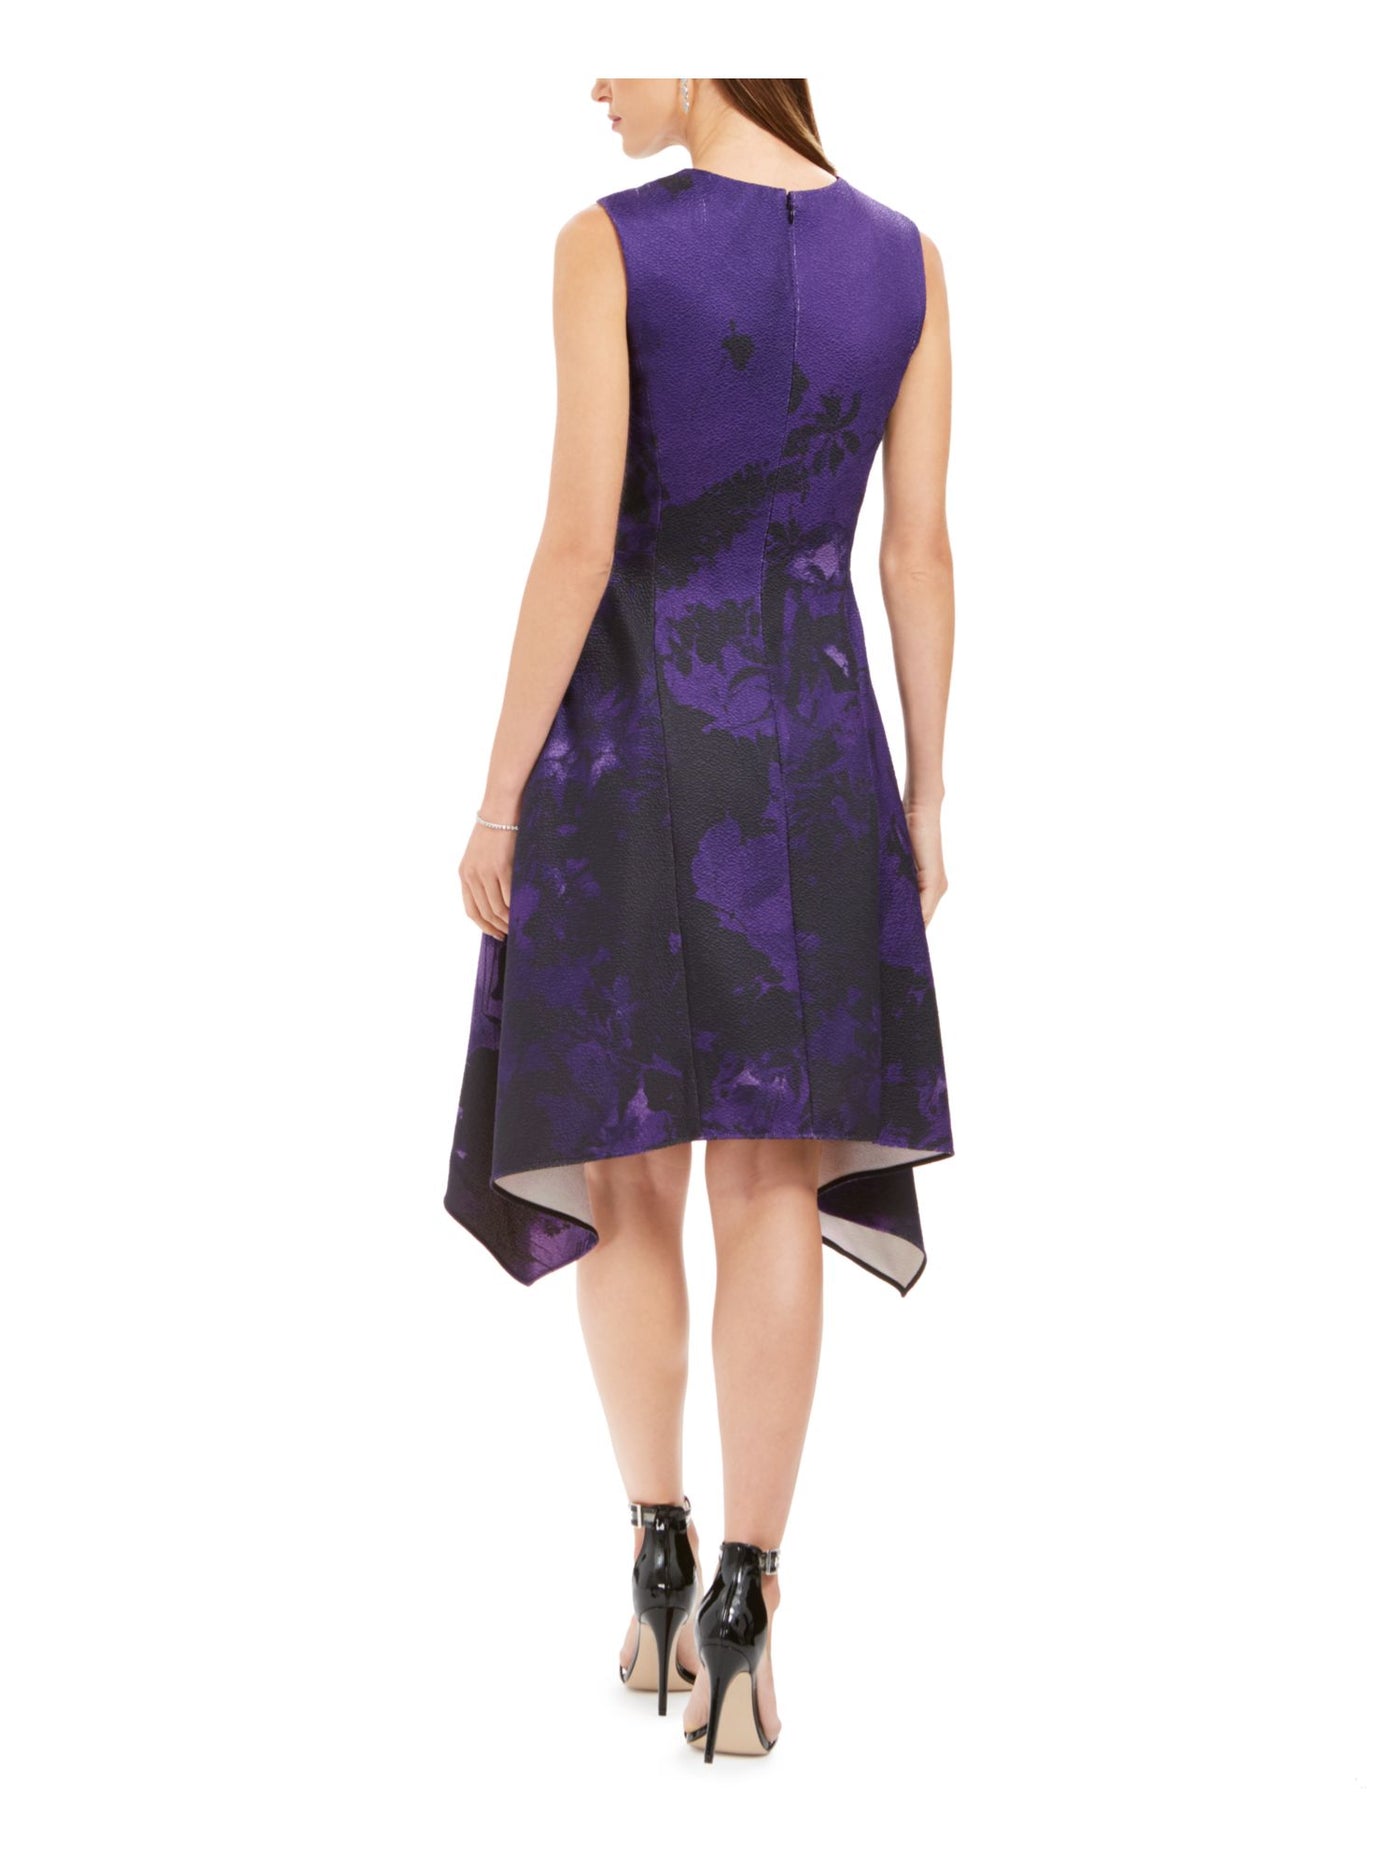 NATORI Womens Purple Zippered Printed Sleeveless Jewel Neck Above The Knee Party Fit + Flare Dress 16